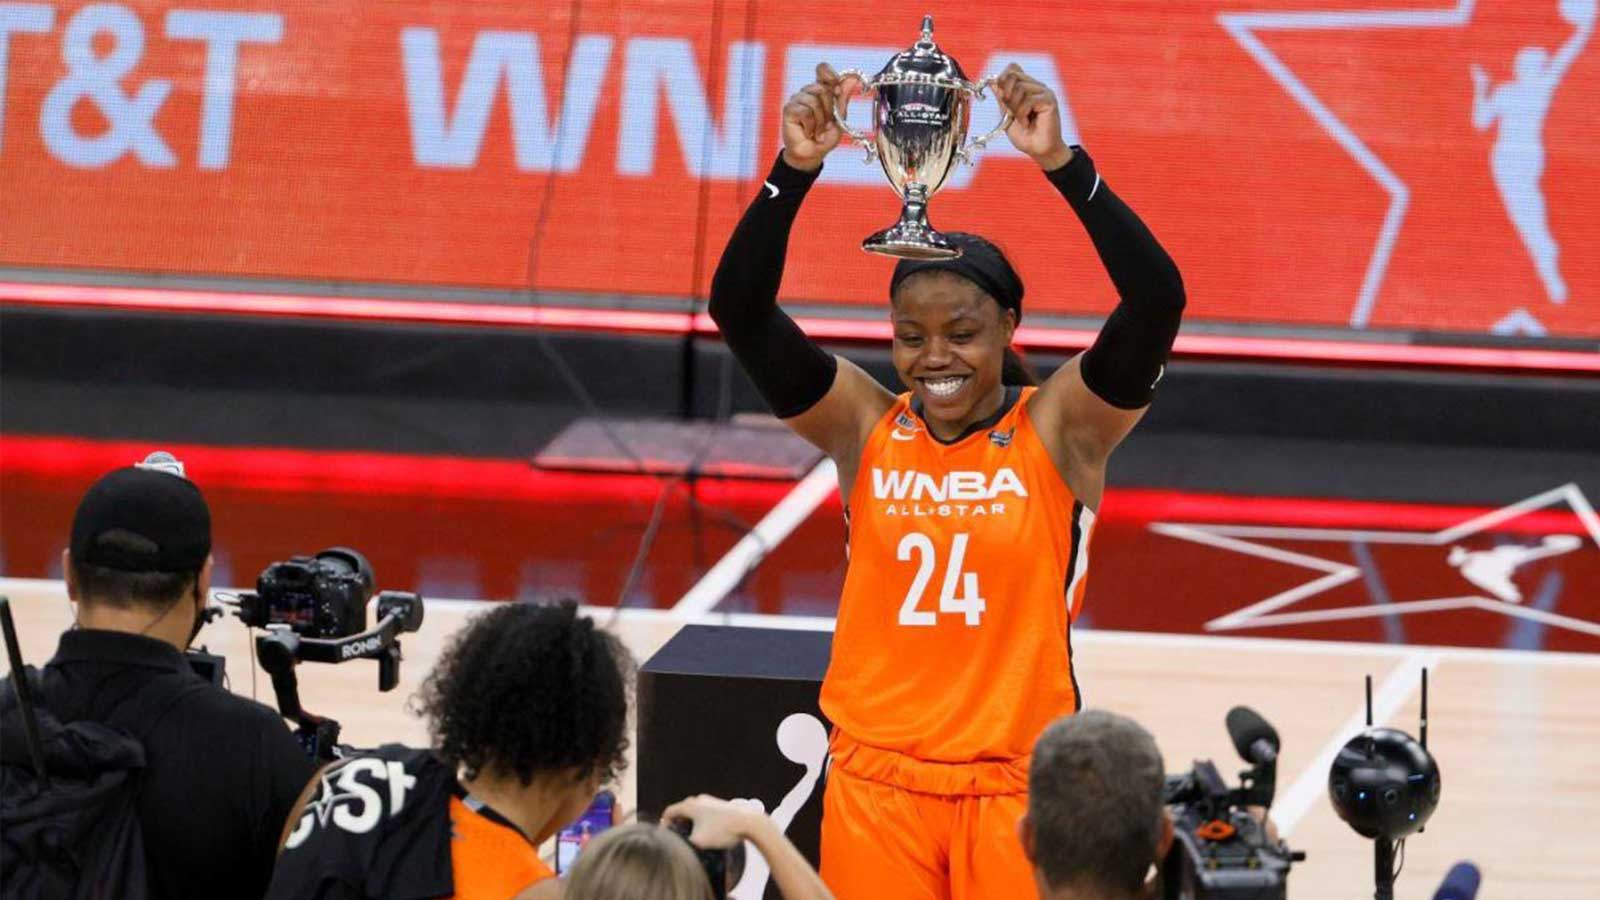 WNBA All-Star USA